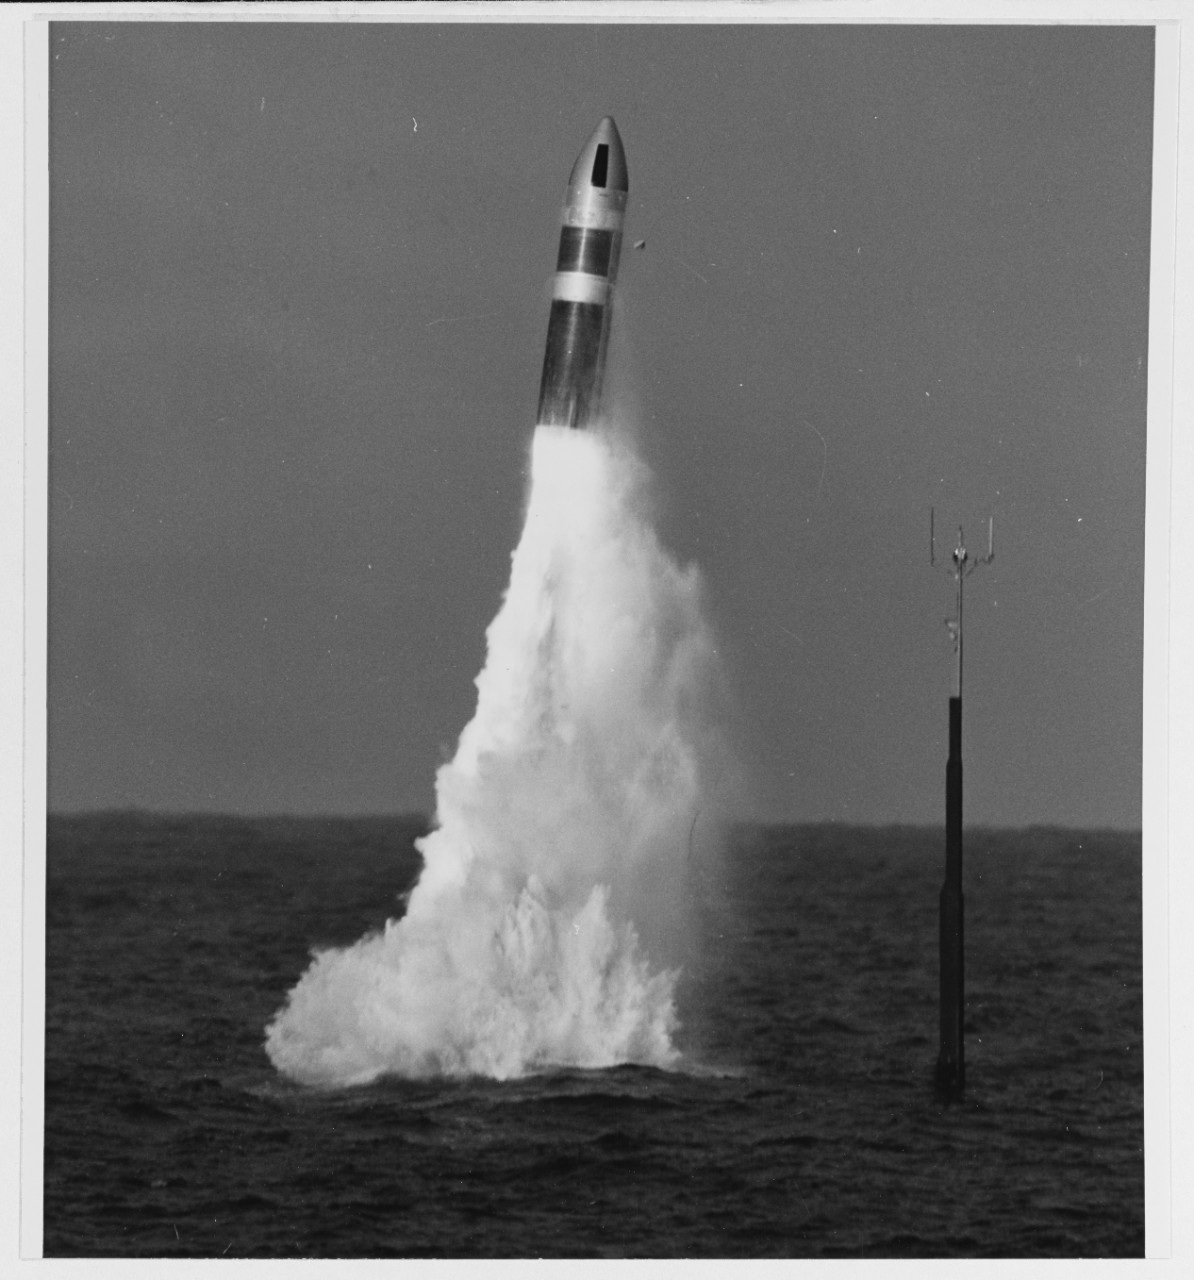 UGM-73A Poseidon C-3 Missile